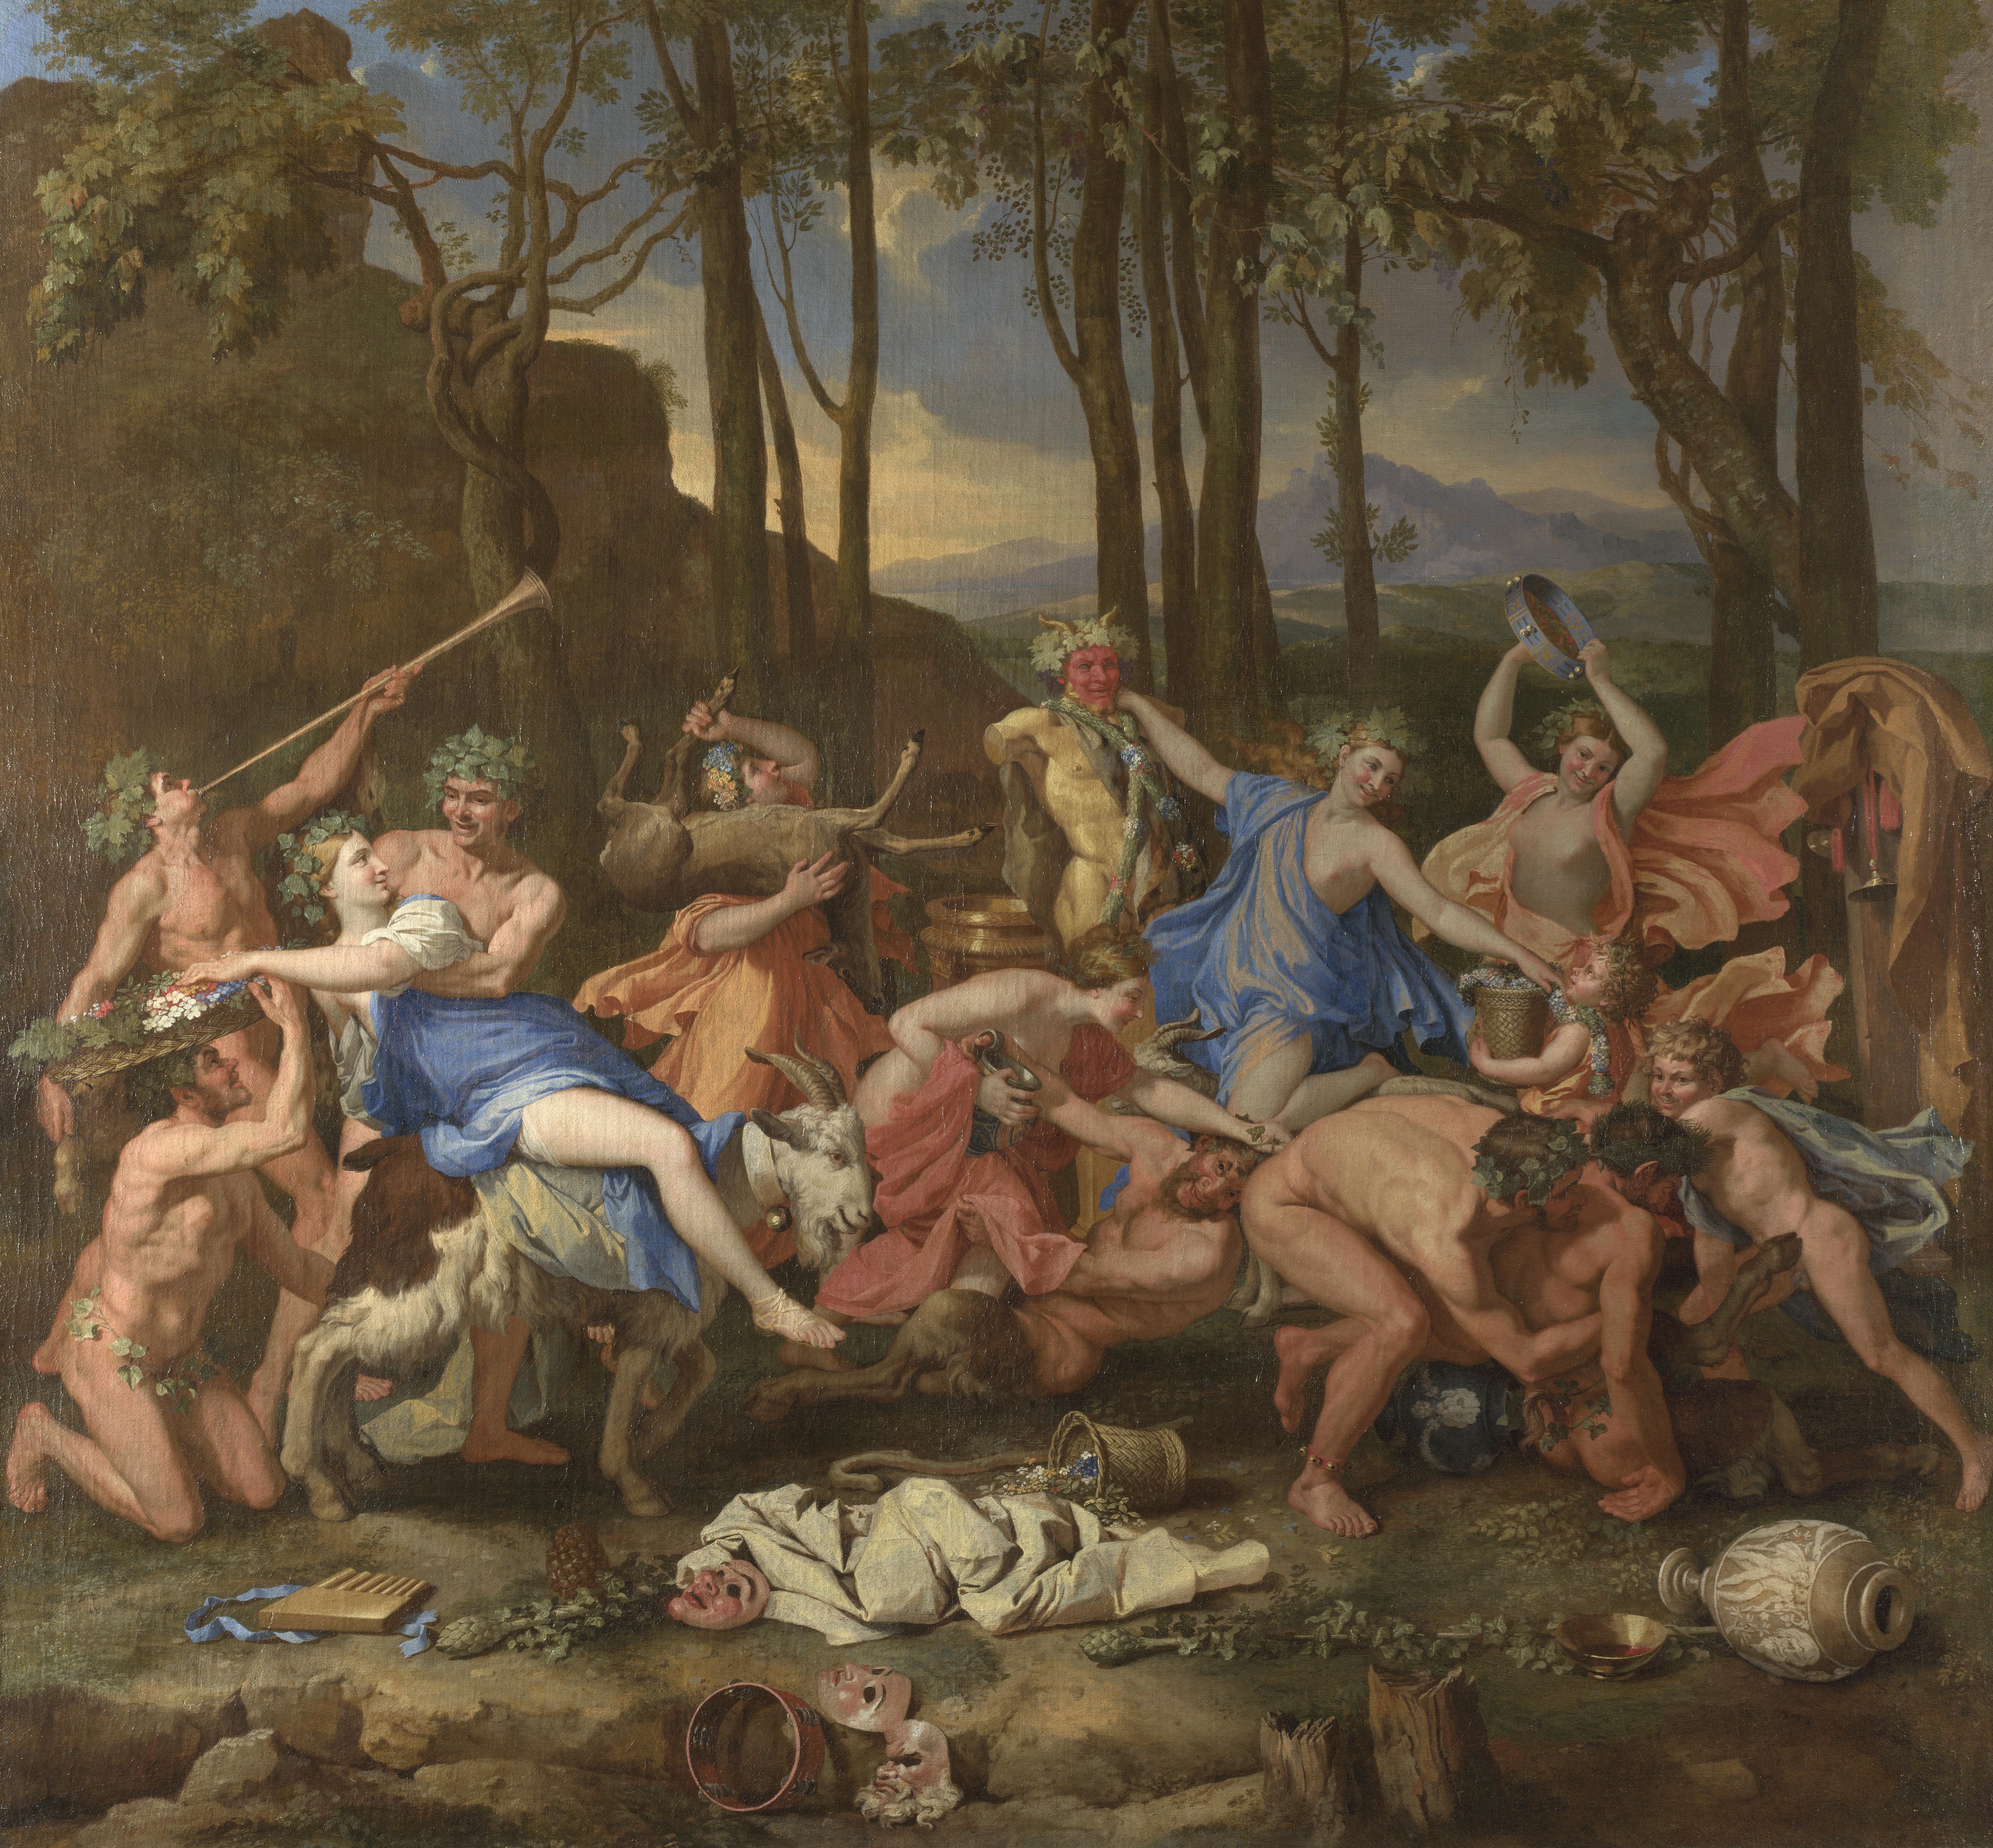 Nicolas_Poussin_-_The_Triumph_of_Pan,_1636